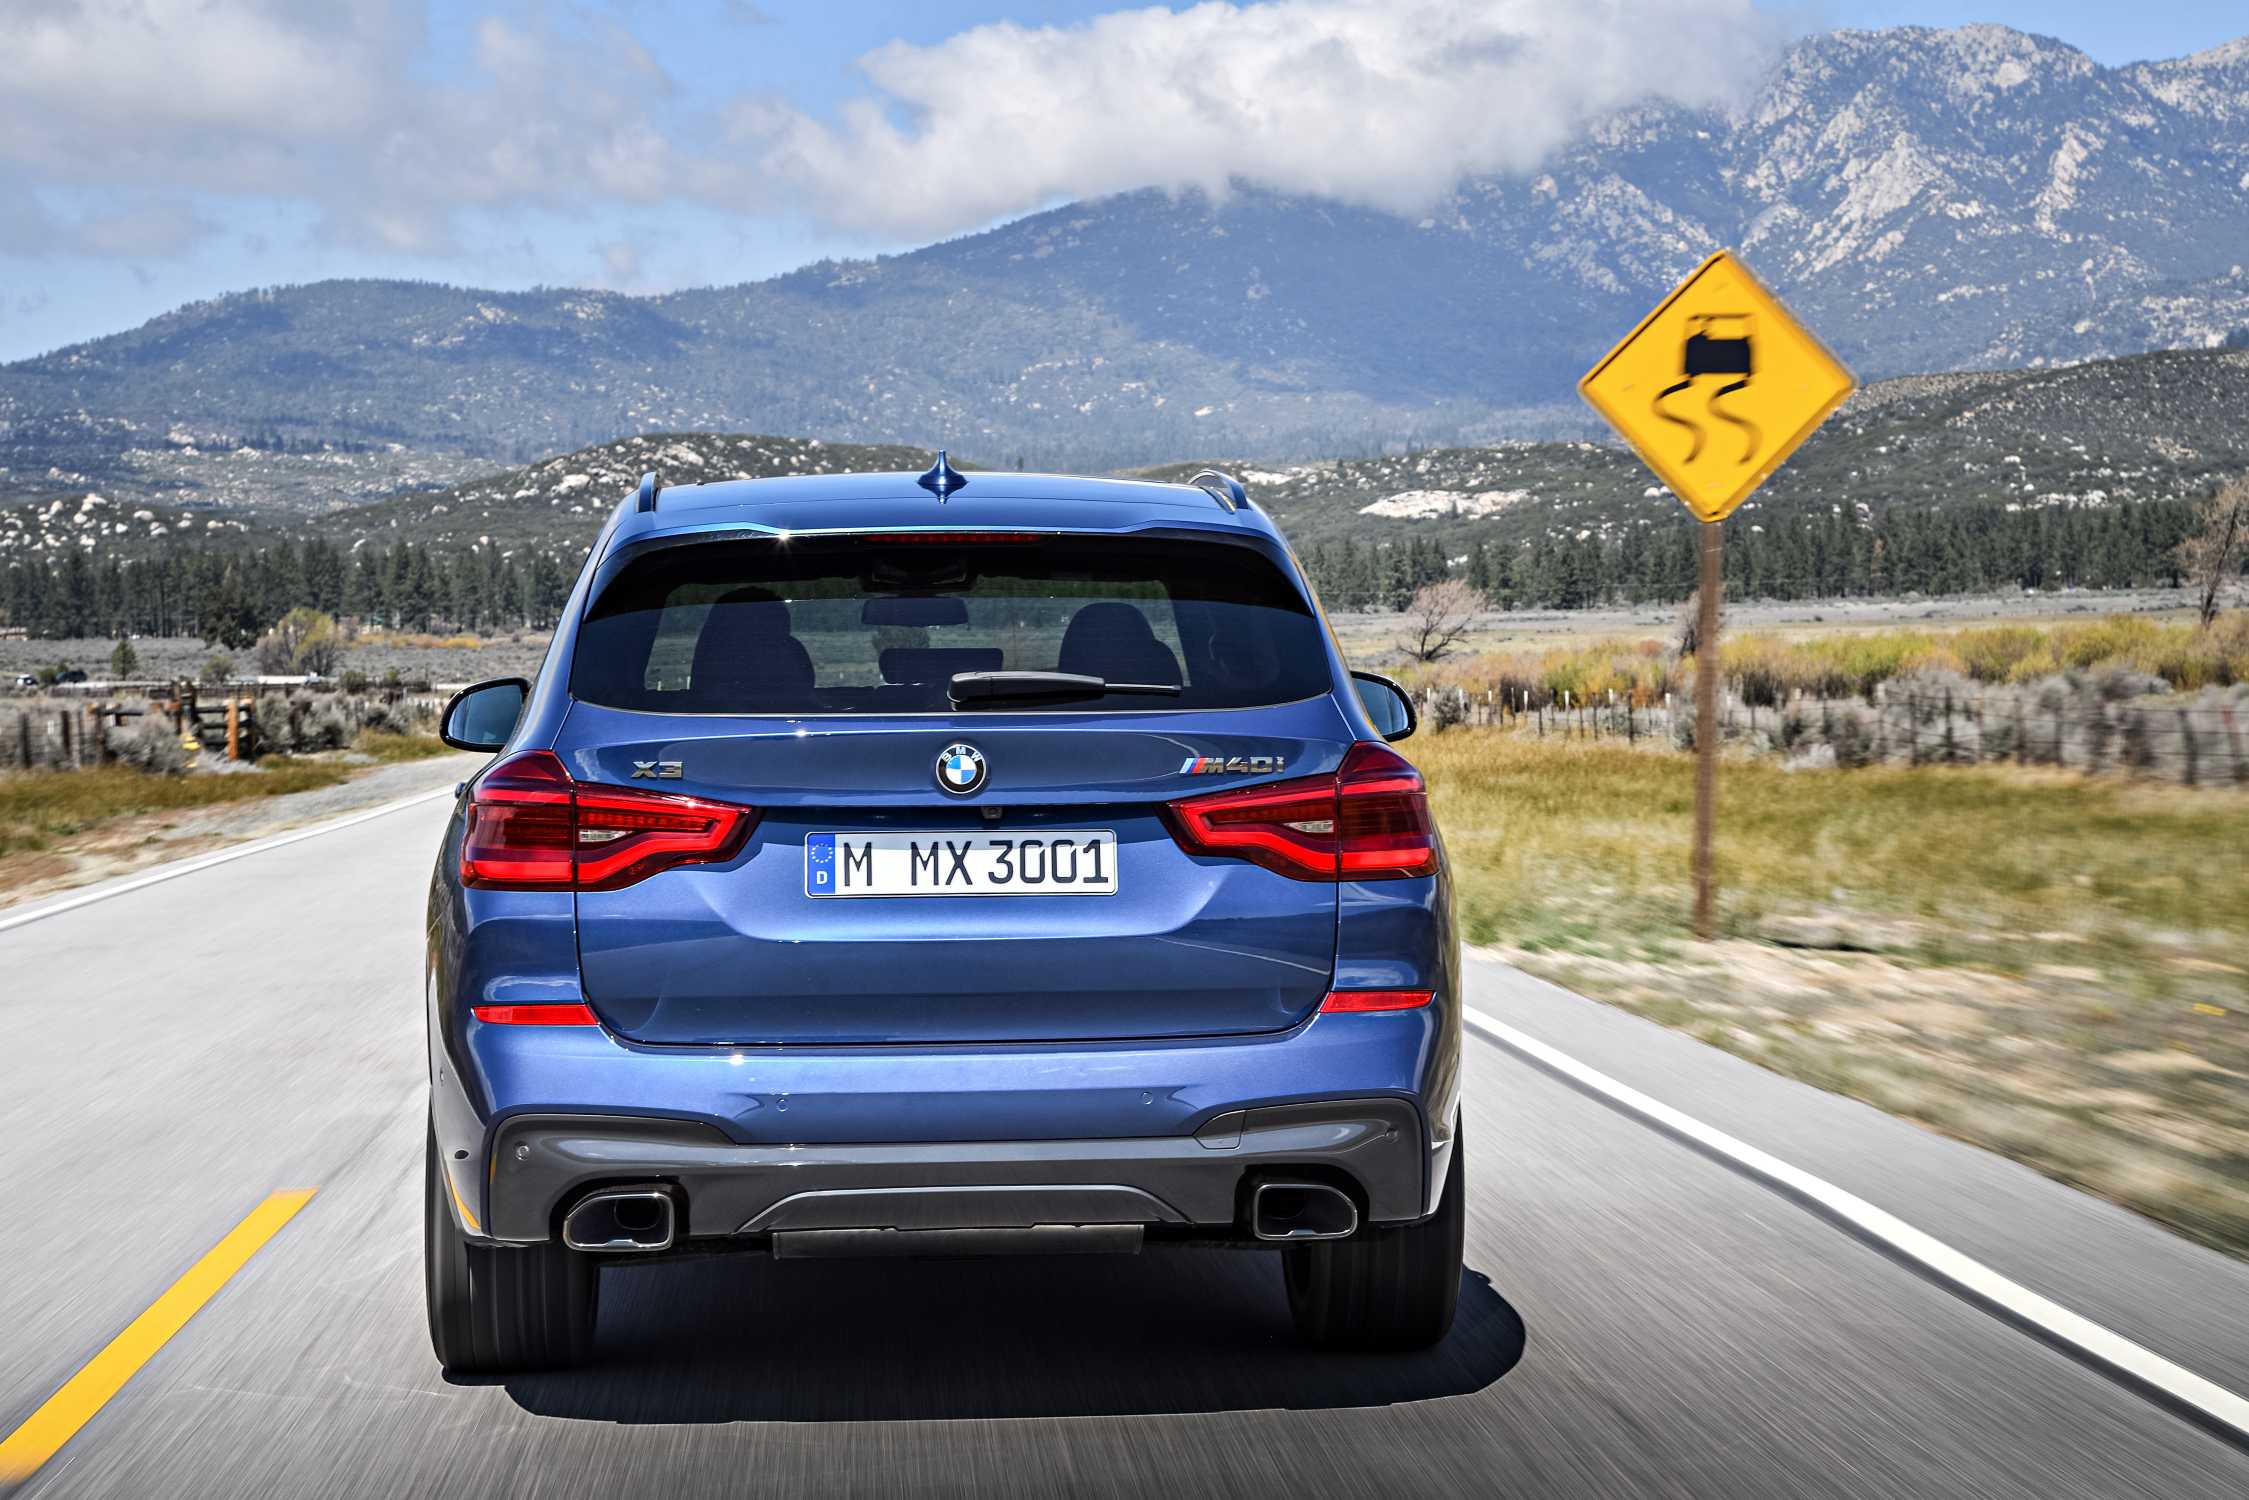 The new BMW X3 xDrive M40i (Exterior color: Phytonic Blue metallic, upholstery: Leder Vernasca Cognac) (06/2017).